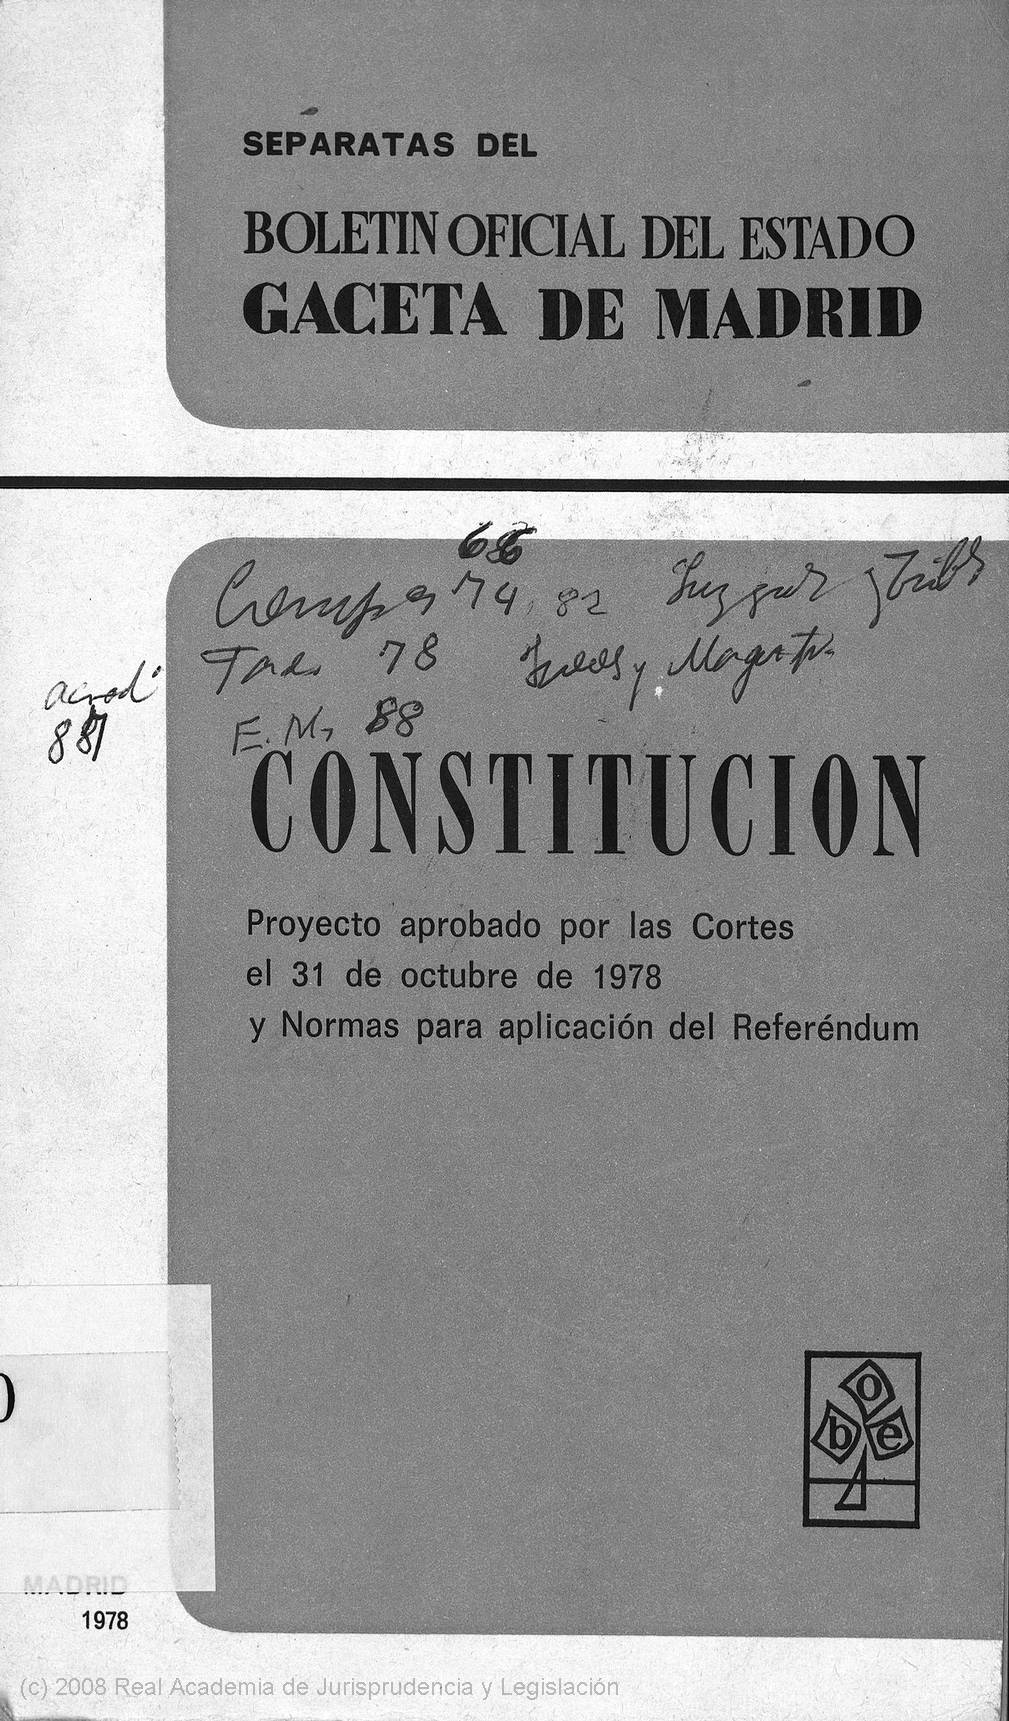 Constitución española de 1978